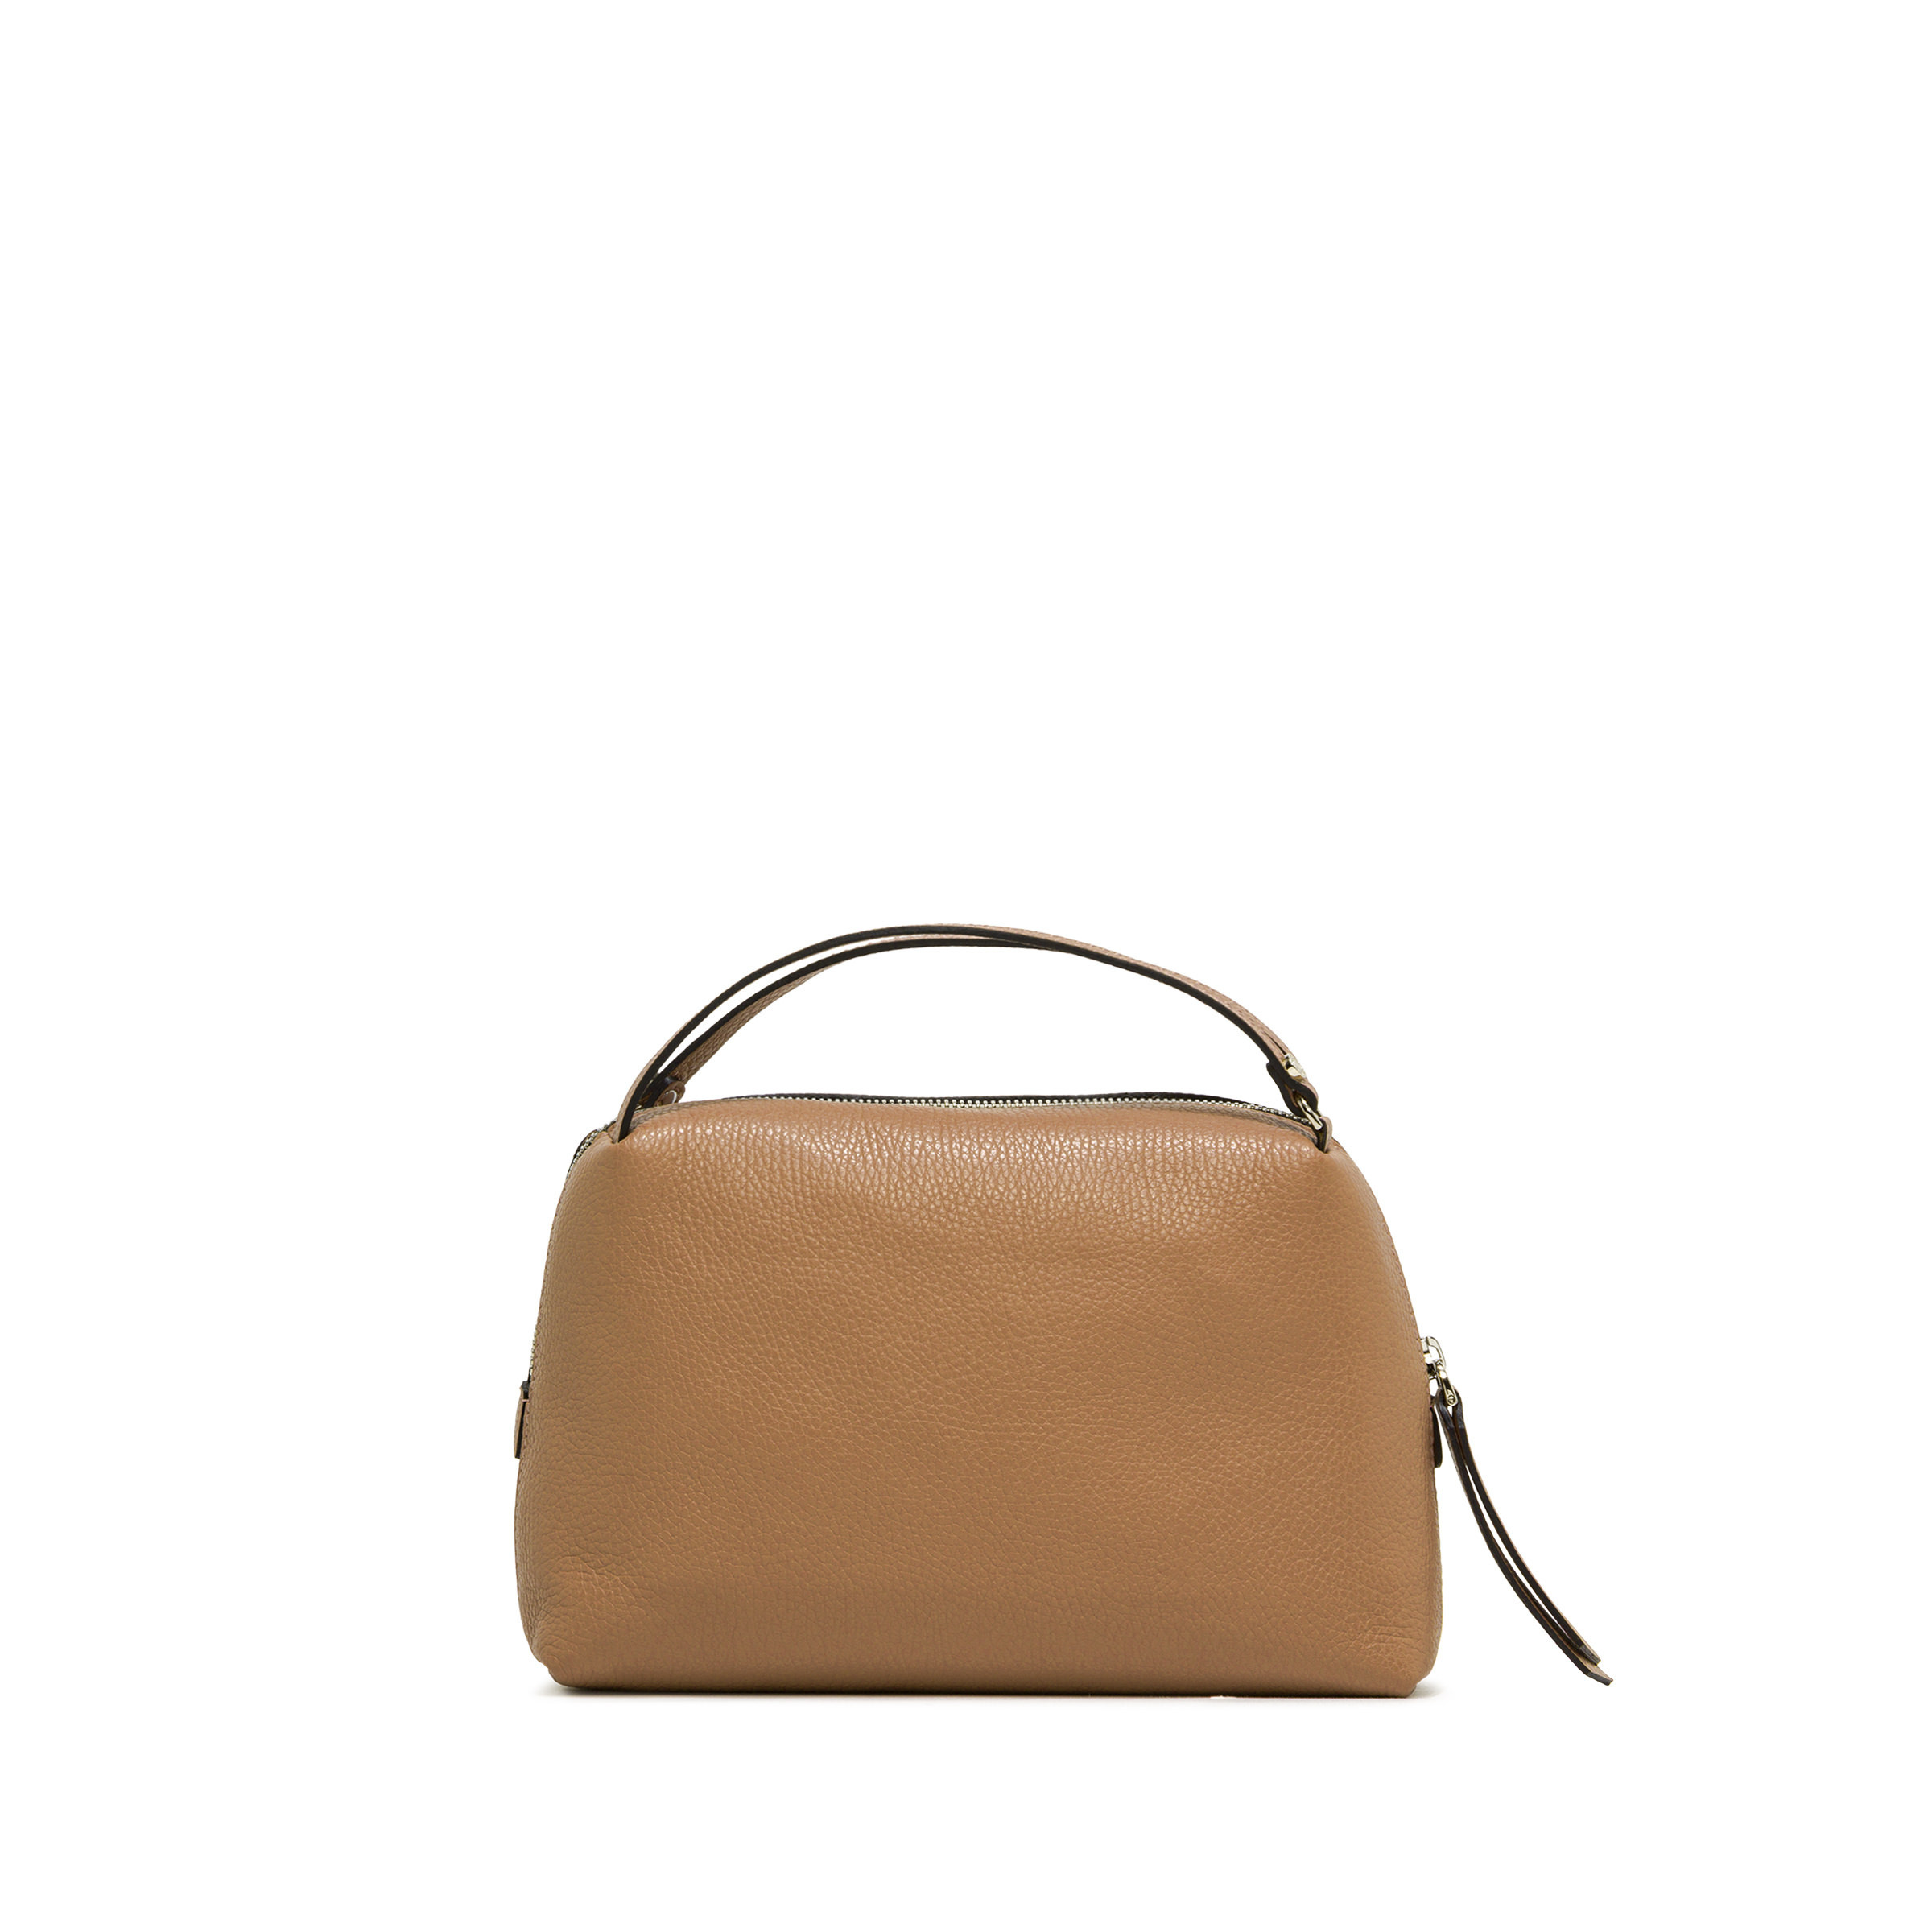 Gianni Chiarini - Alifa bag in leather, Natural, large image number 1